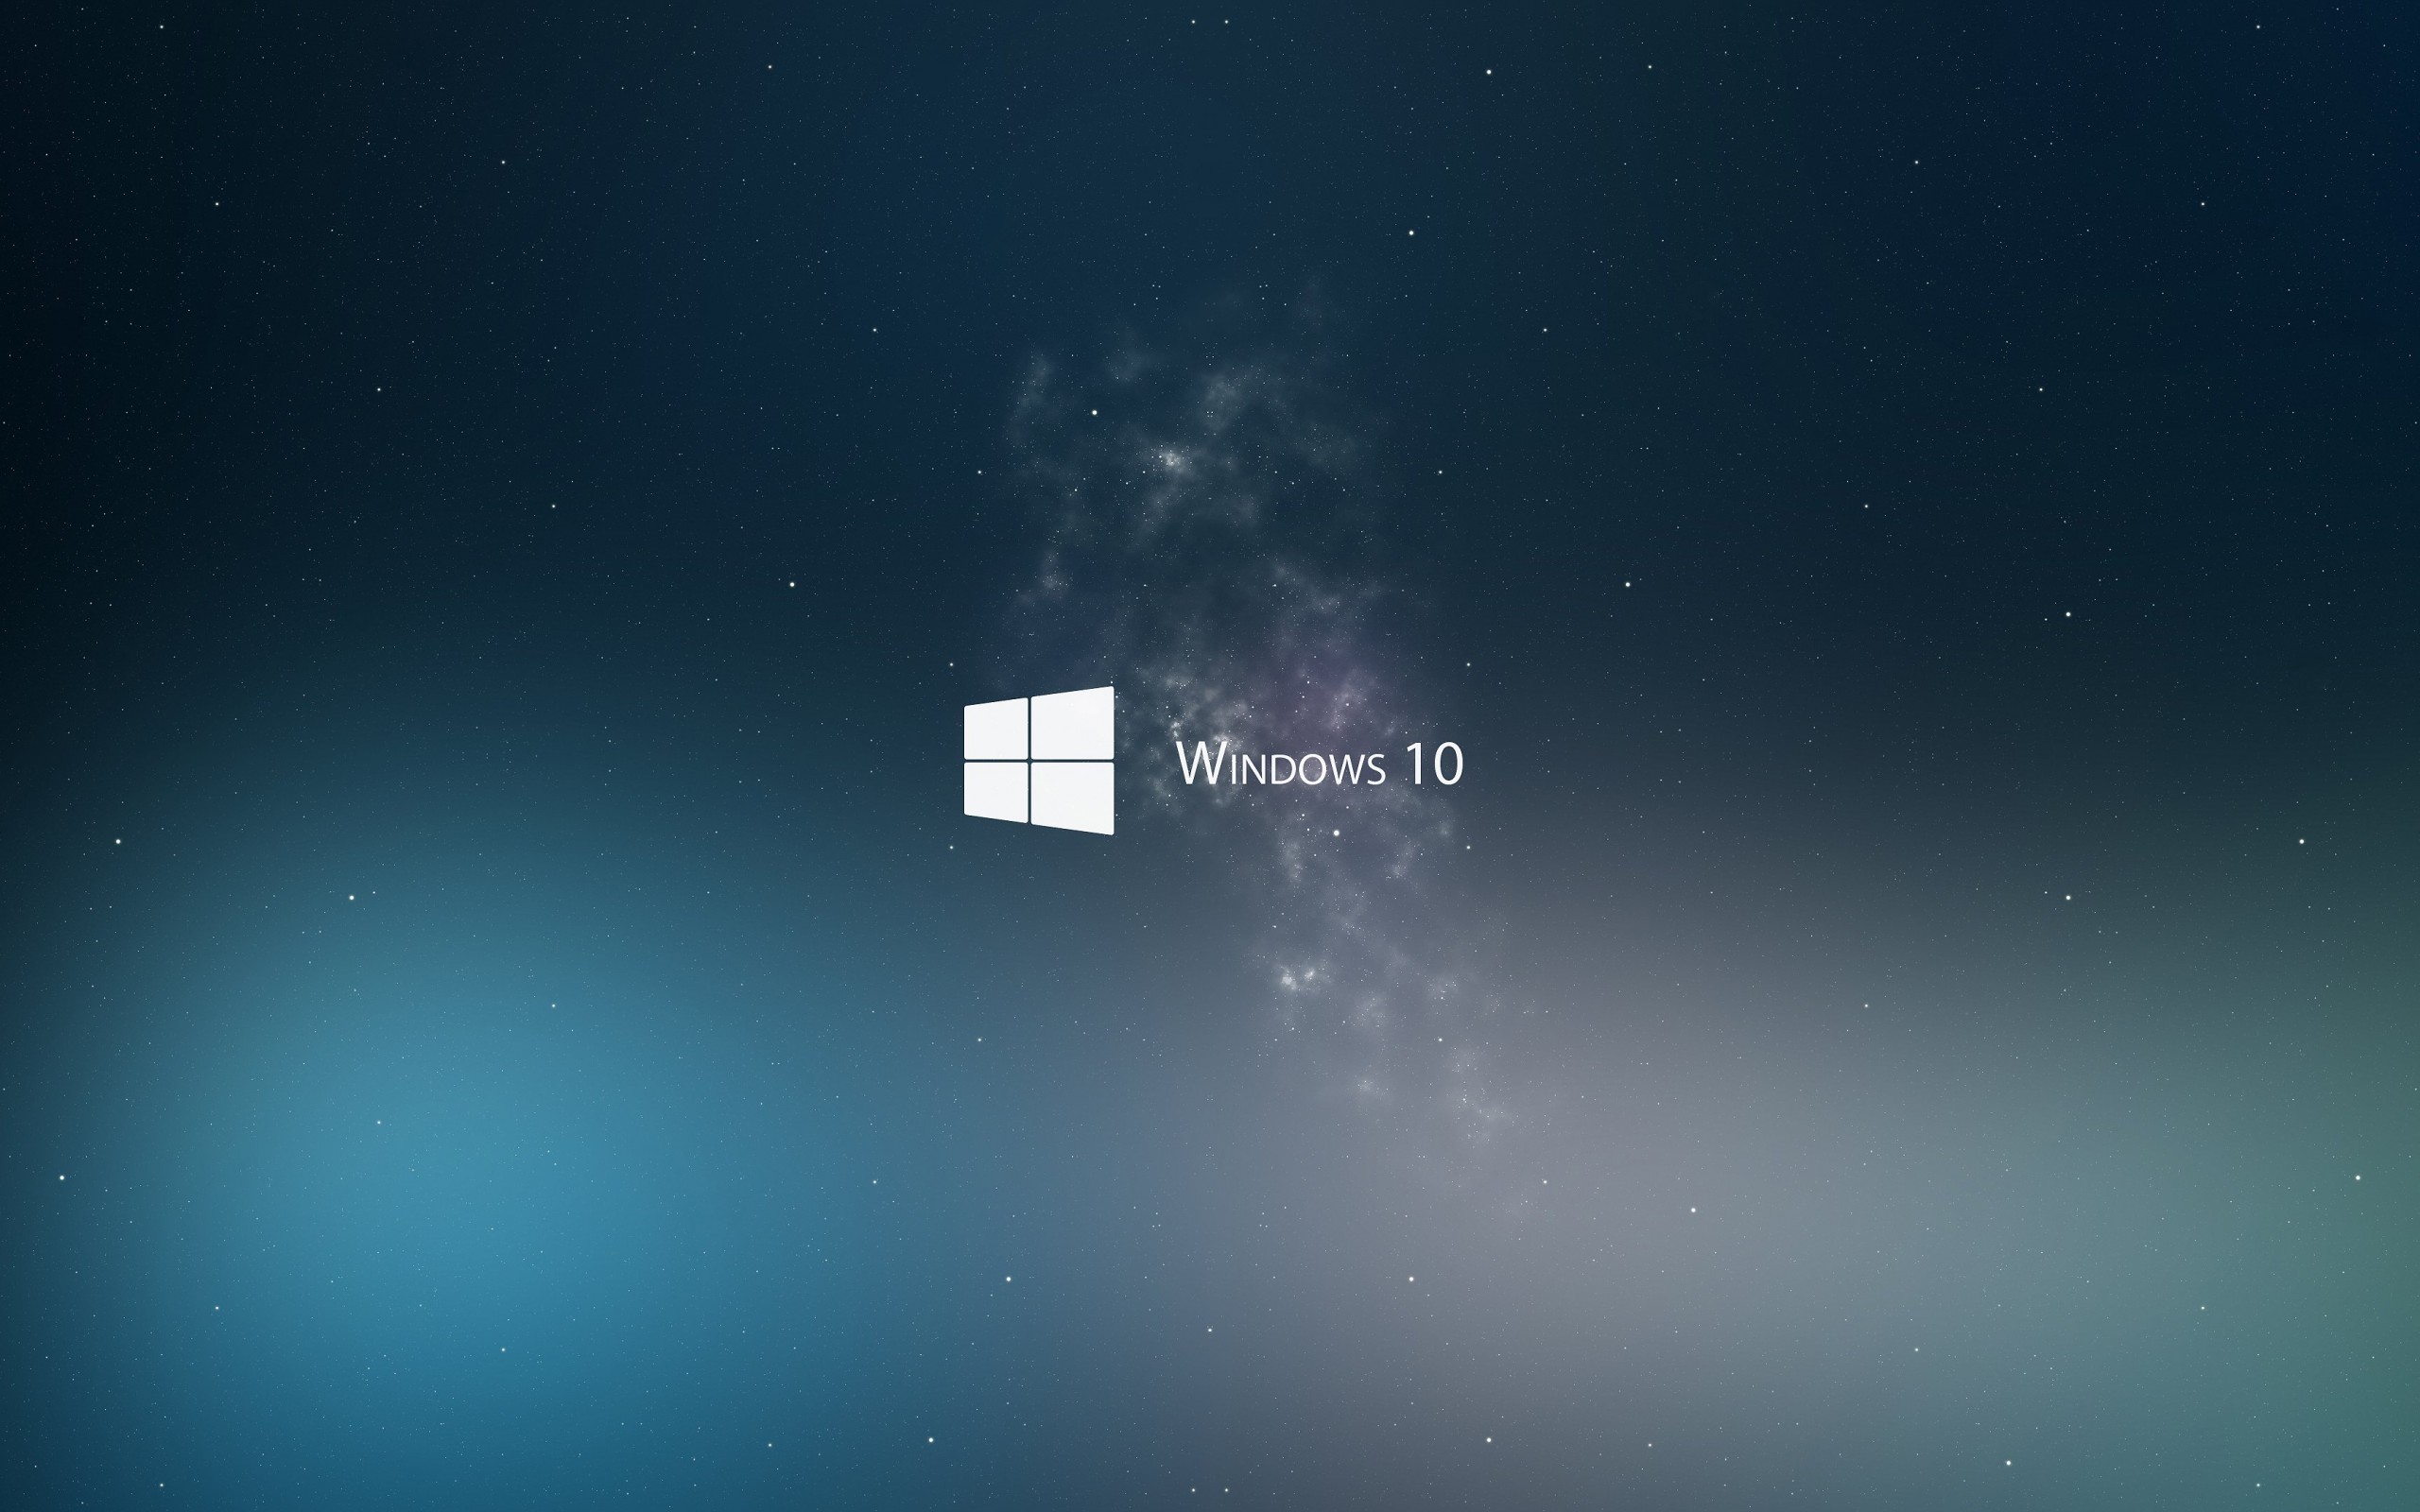 Windows 10 Wallpaper for Desktop 2560x1600